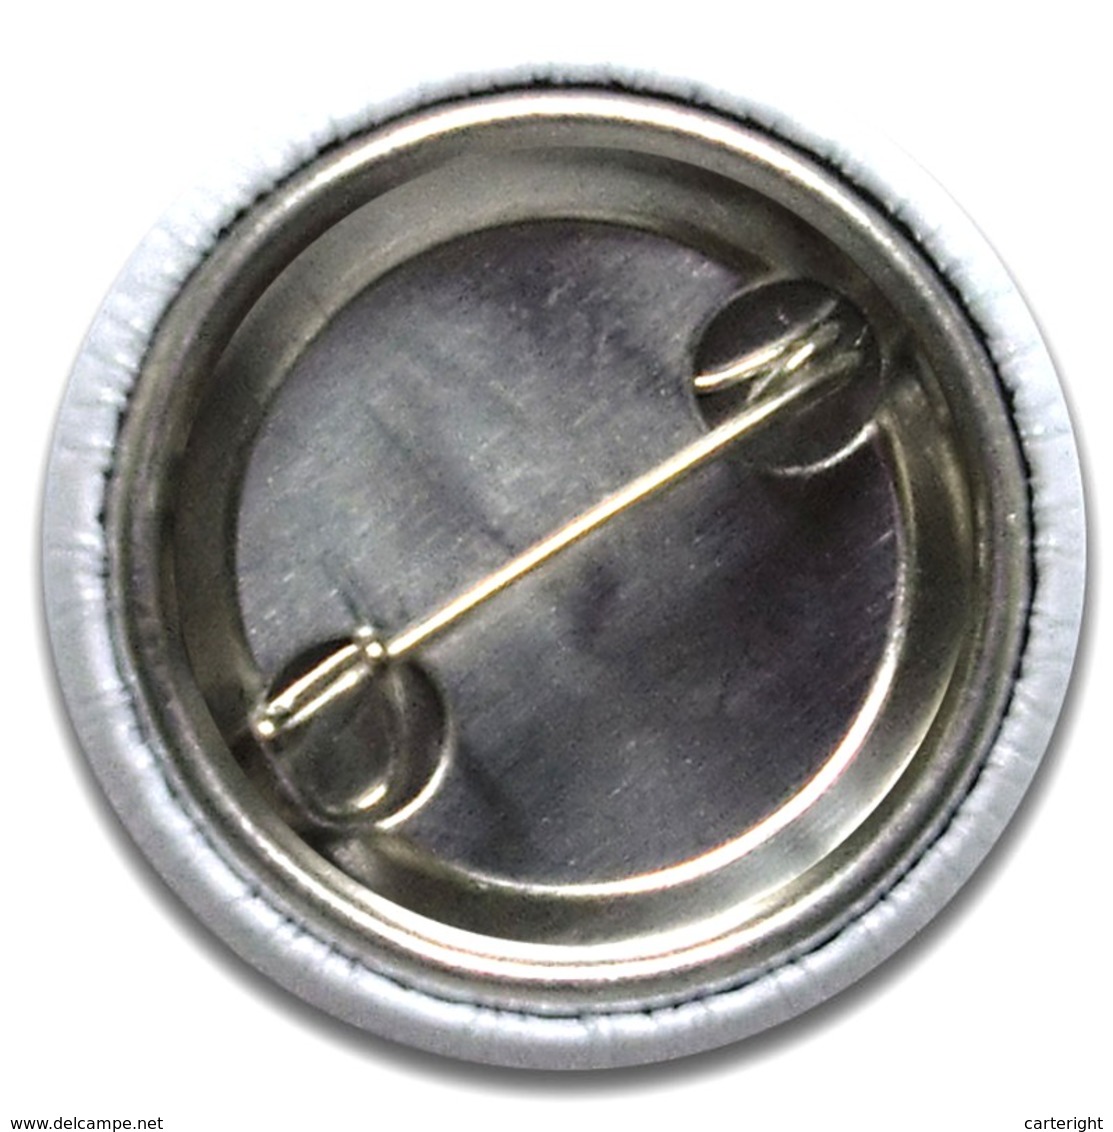 35 X Writer Edgar Allan Poe ART BADGE BUTTON PIN SET 3 (1inch/25mm Diameter) - Celebrities